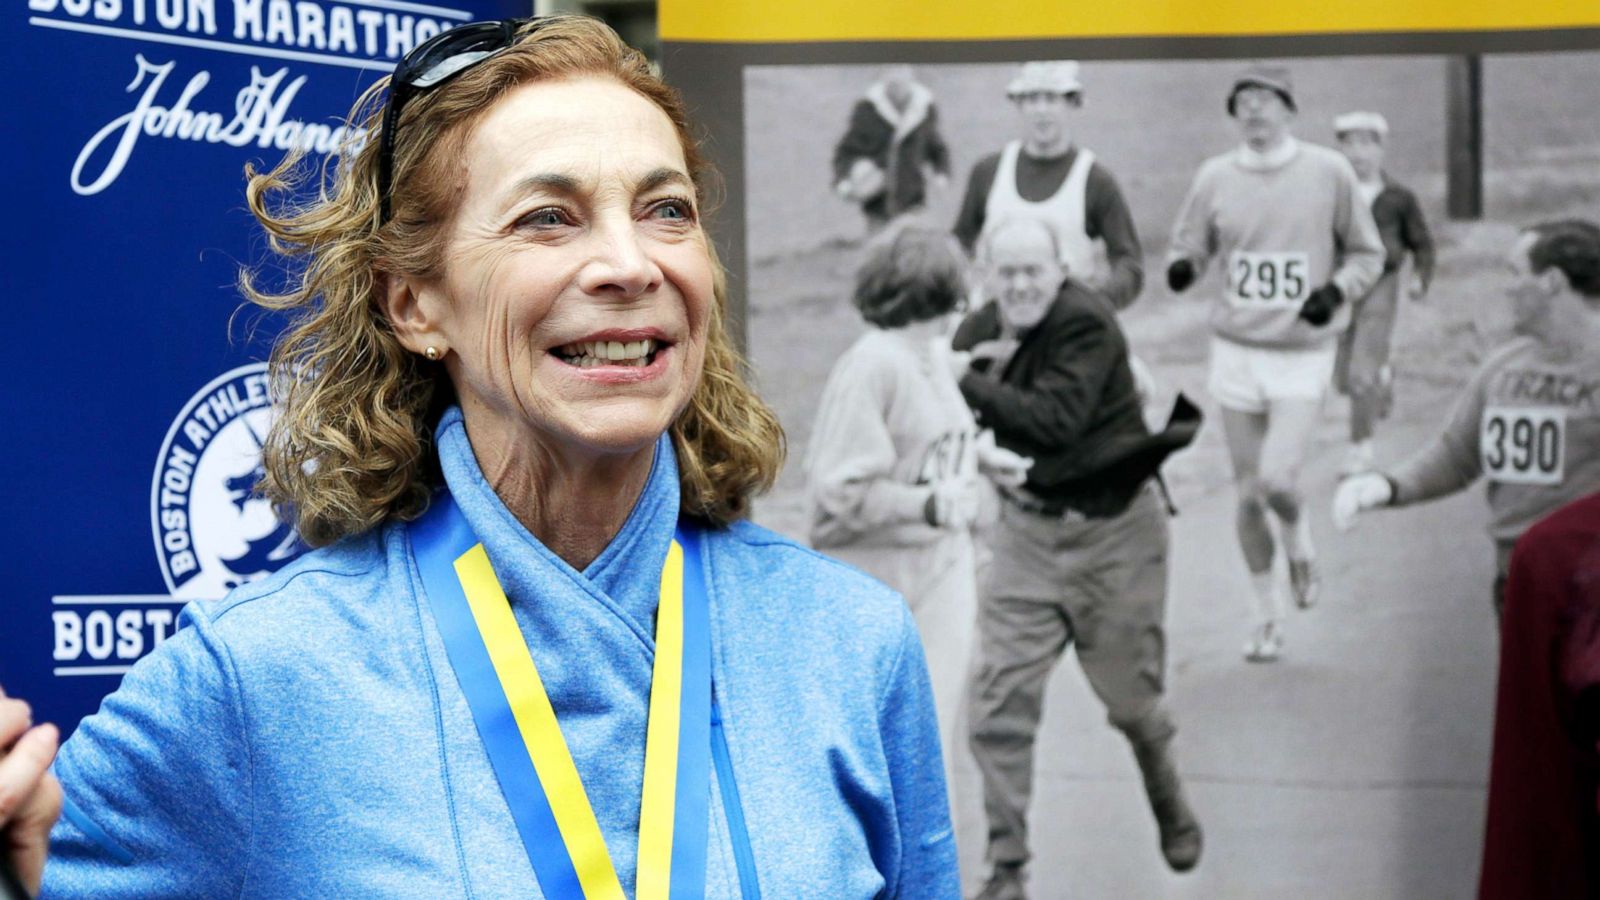 https://s.abcnews.com/images/US/women-in-sports-marathon-1967-boston-kathrine-switzer-03-ap-llr-220609_1654798088307_hpMain_16x9_1600.jpg